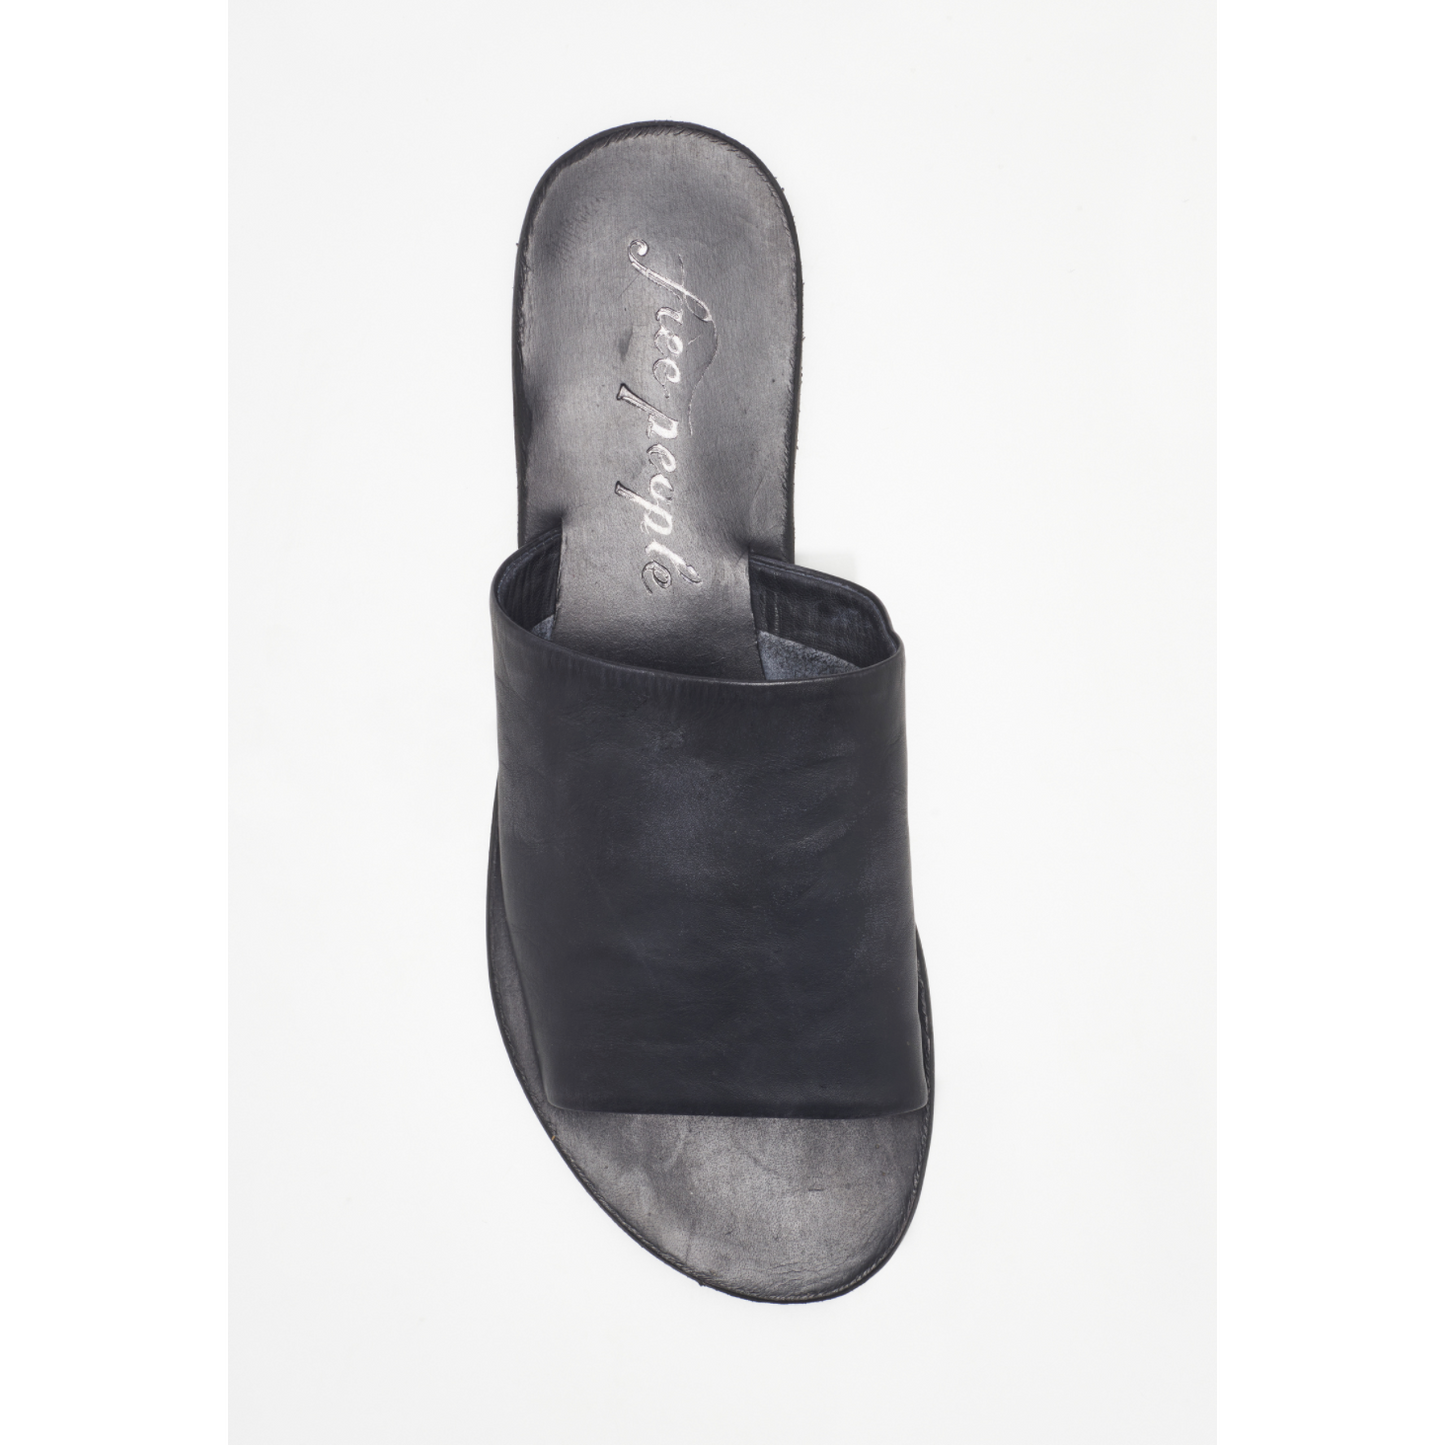 Free People Vicente Slide Sandals- Black